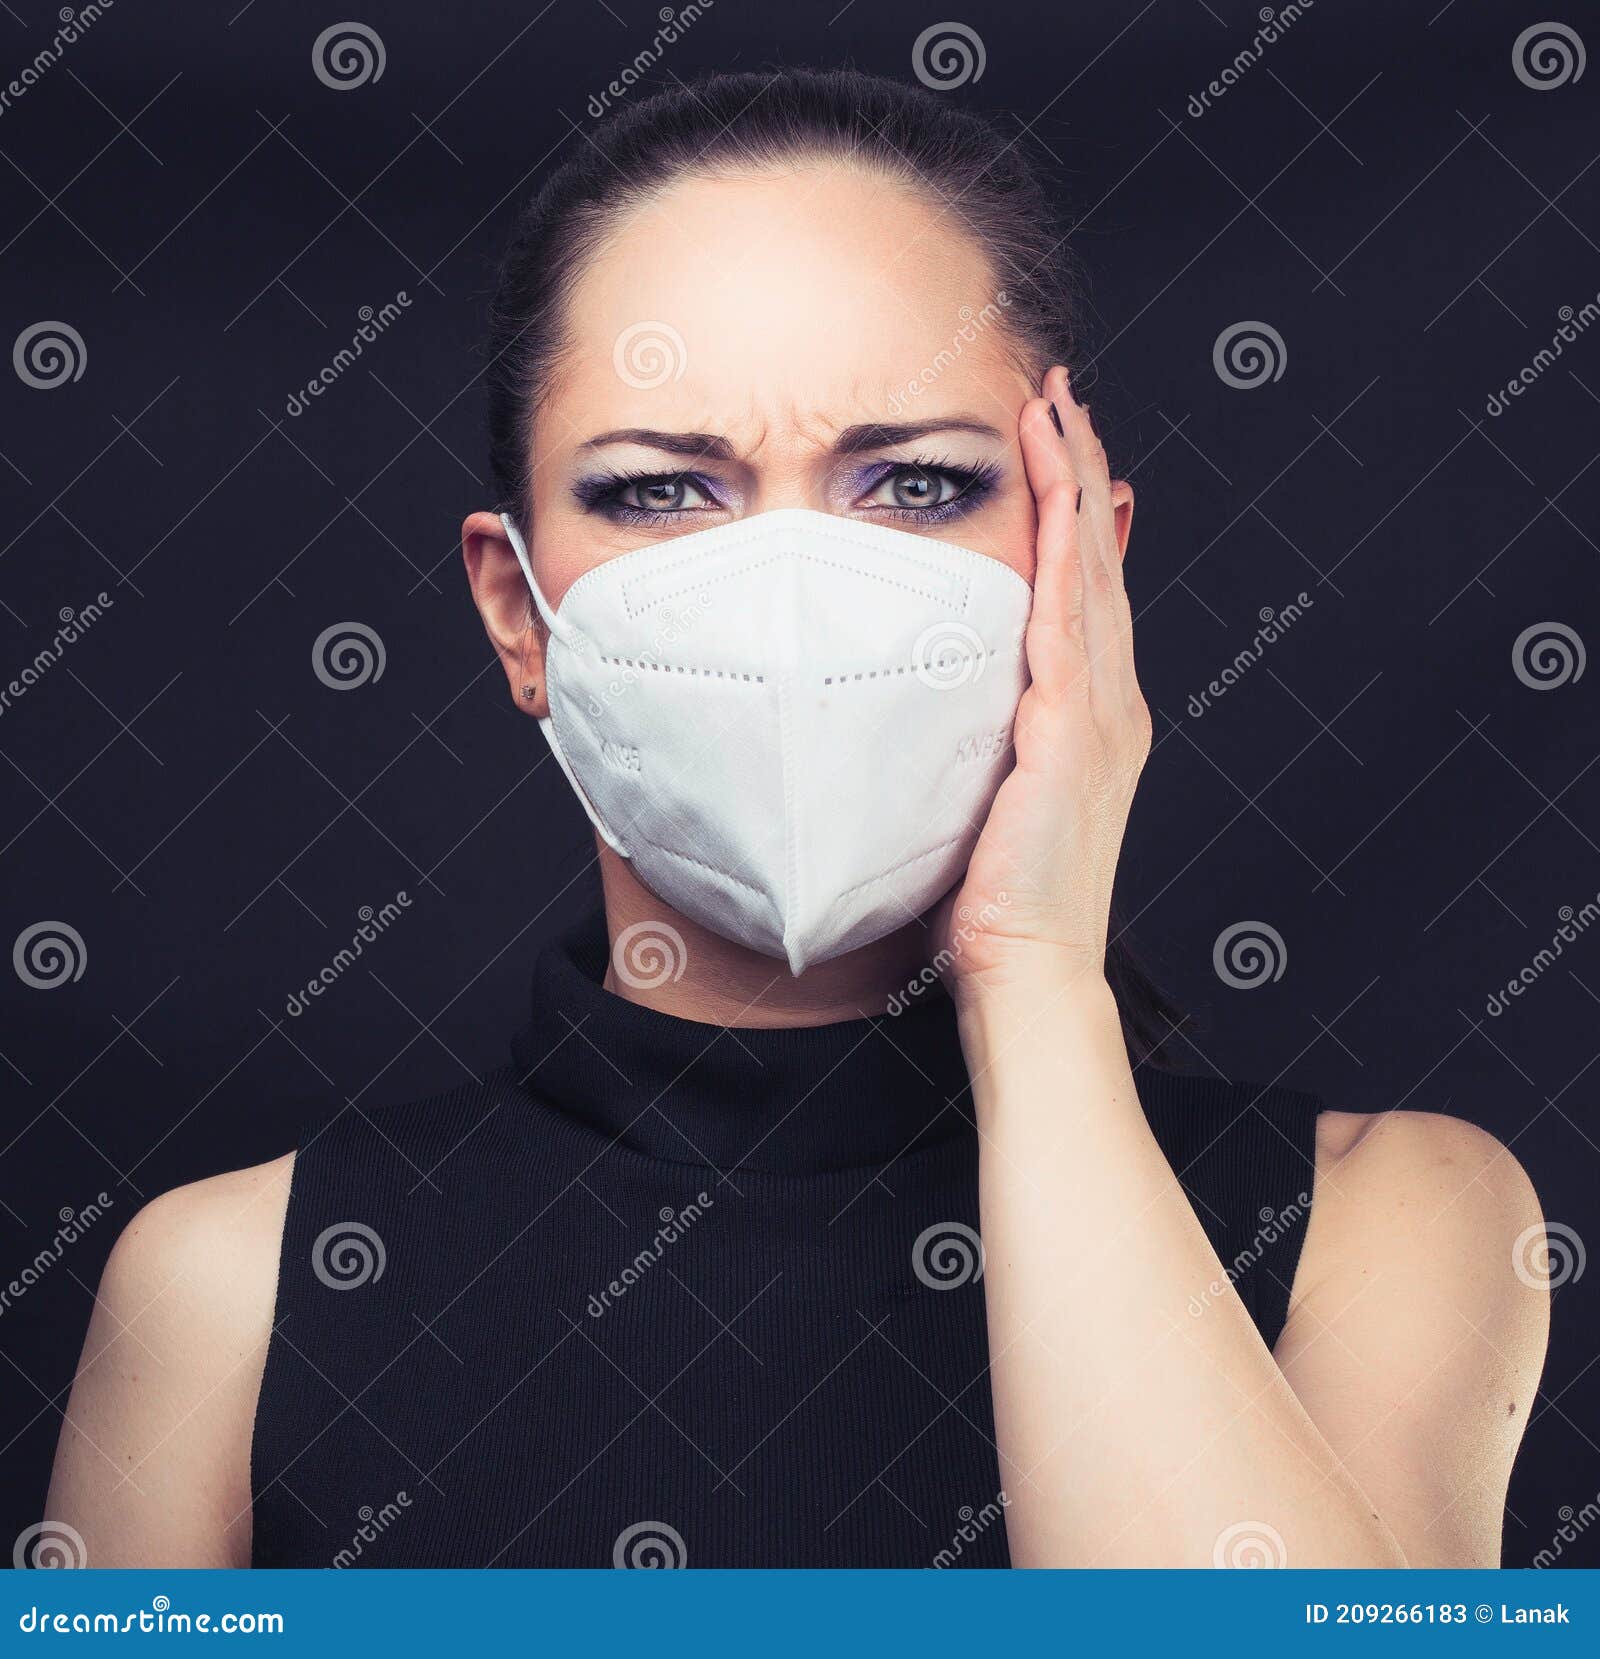 woman wearing face mask